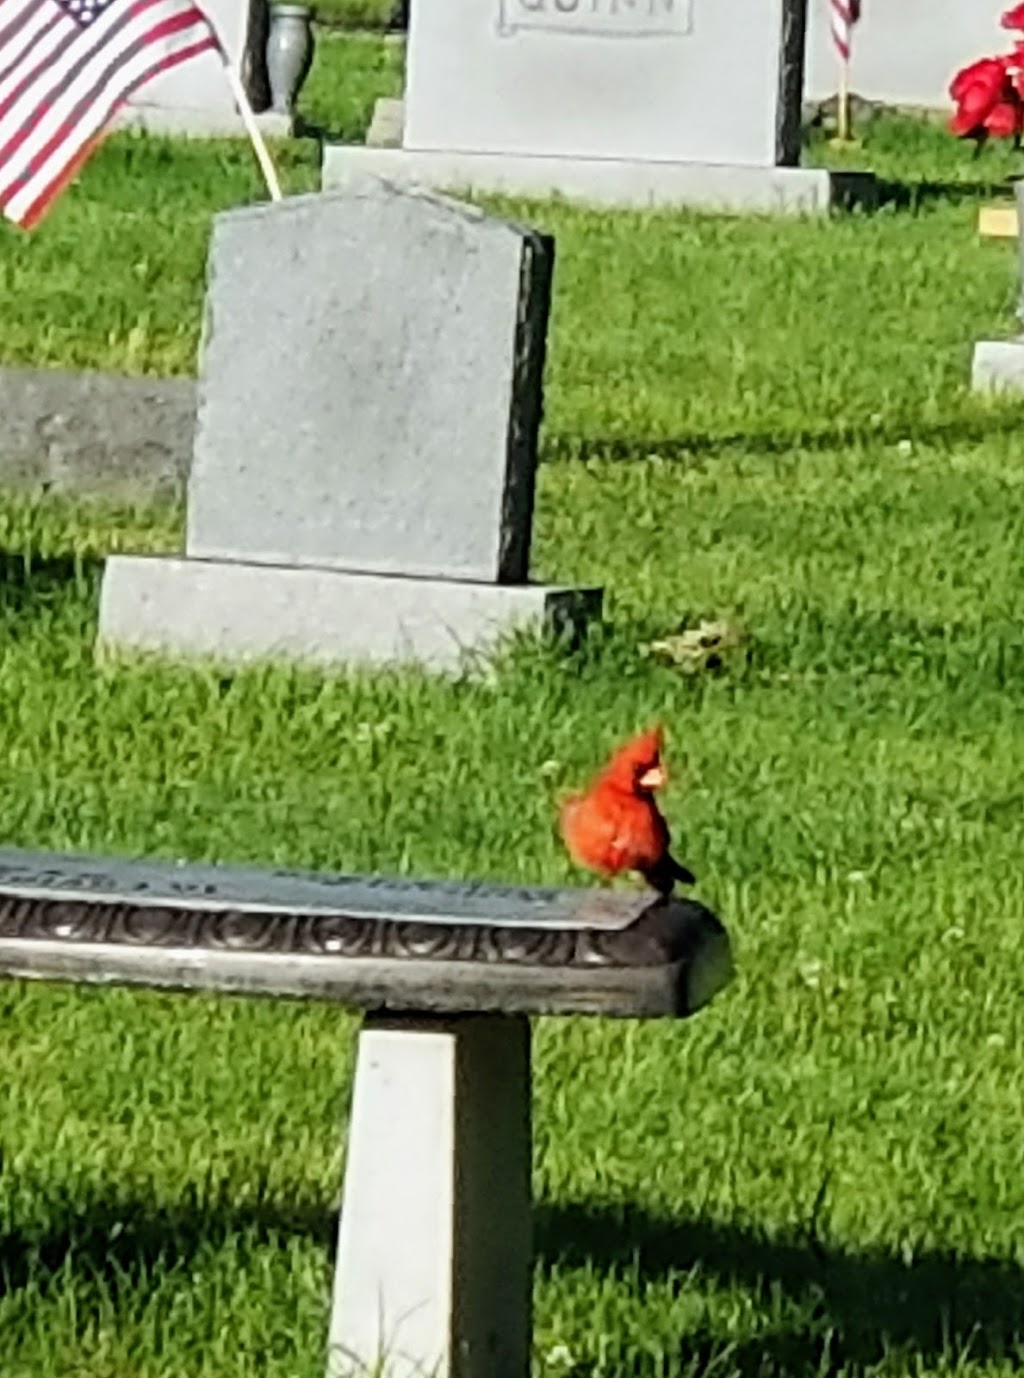 Grove City Cemetery | Grove City, OH 43123 | Phone: (614) 875-3682